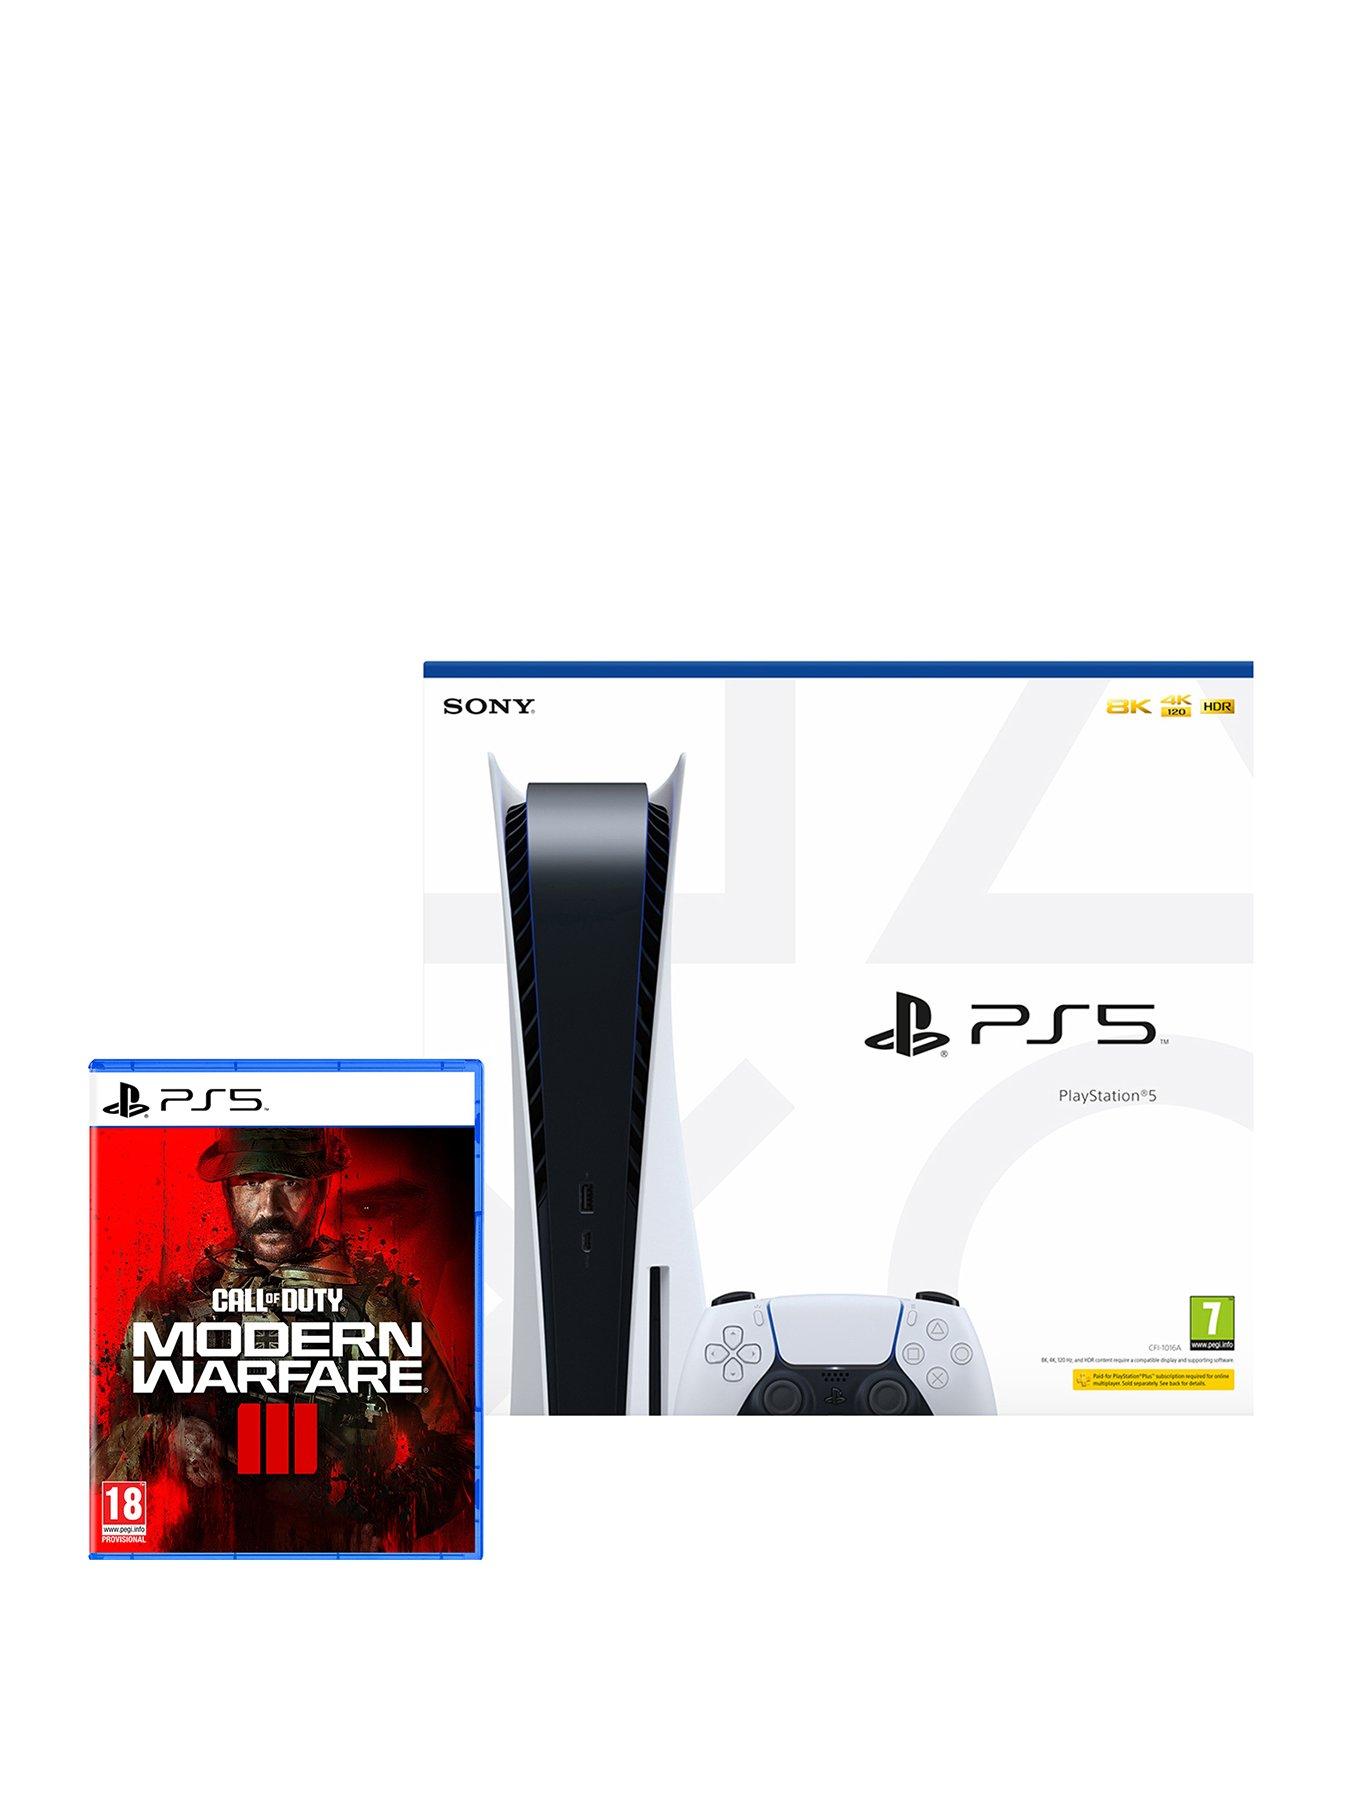 PlayStation 5 Console with Call of Duty: Modern Warfare III Bundle